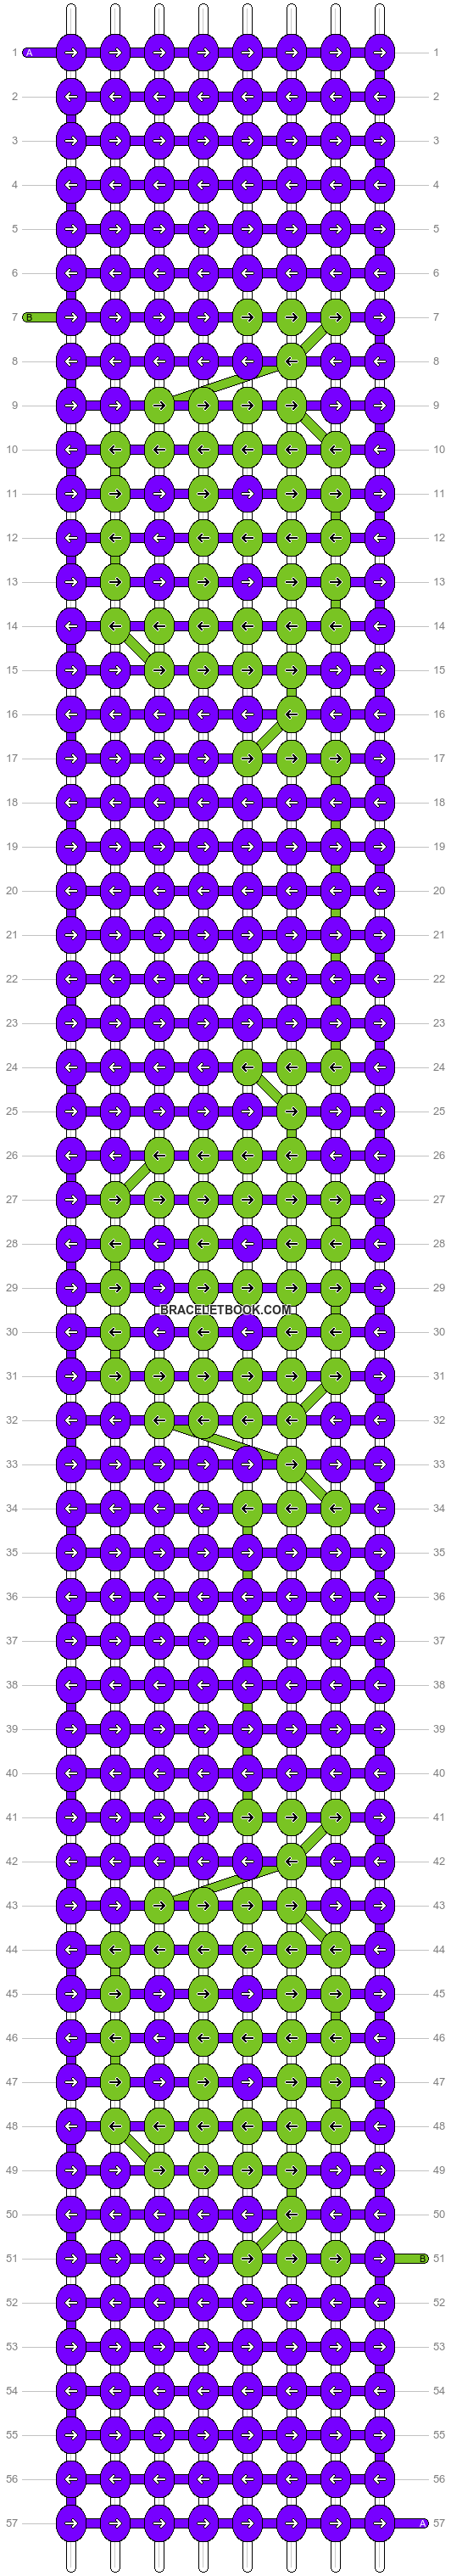 Alpha pattern #37633 variation #47288 pattern